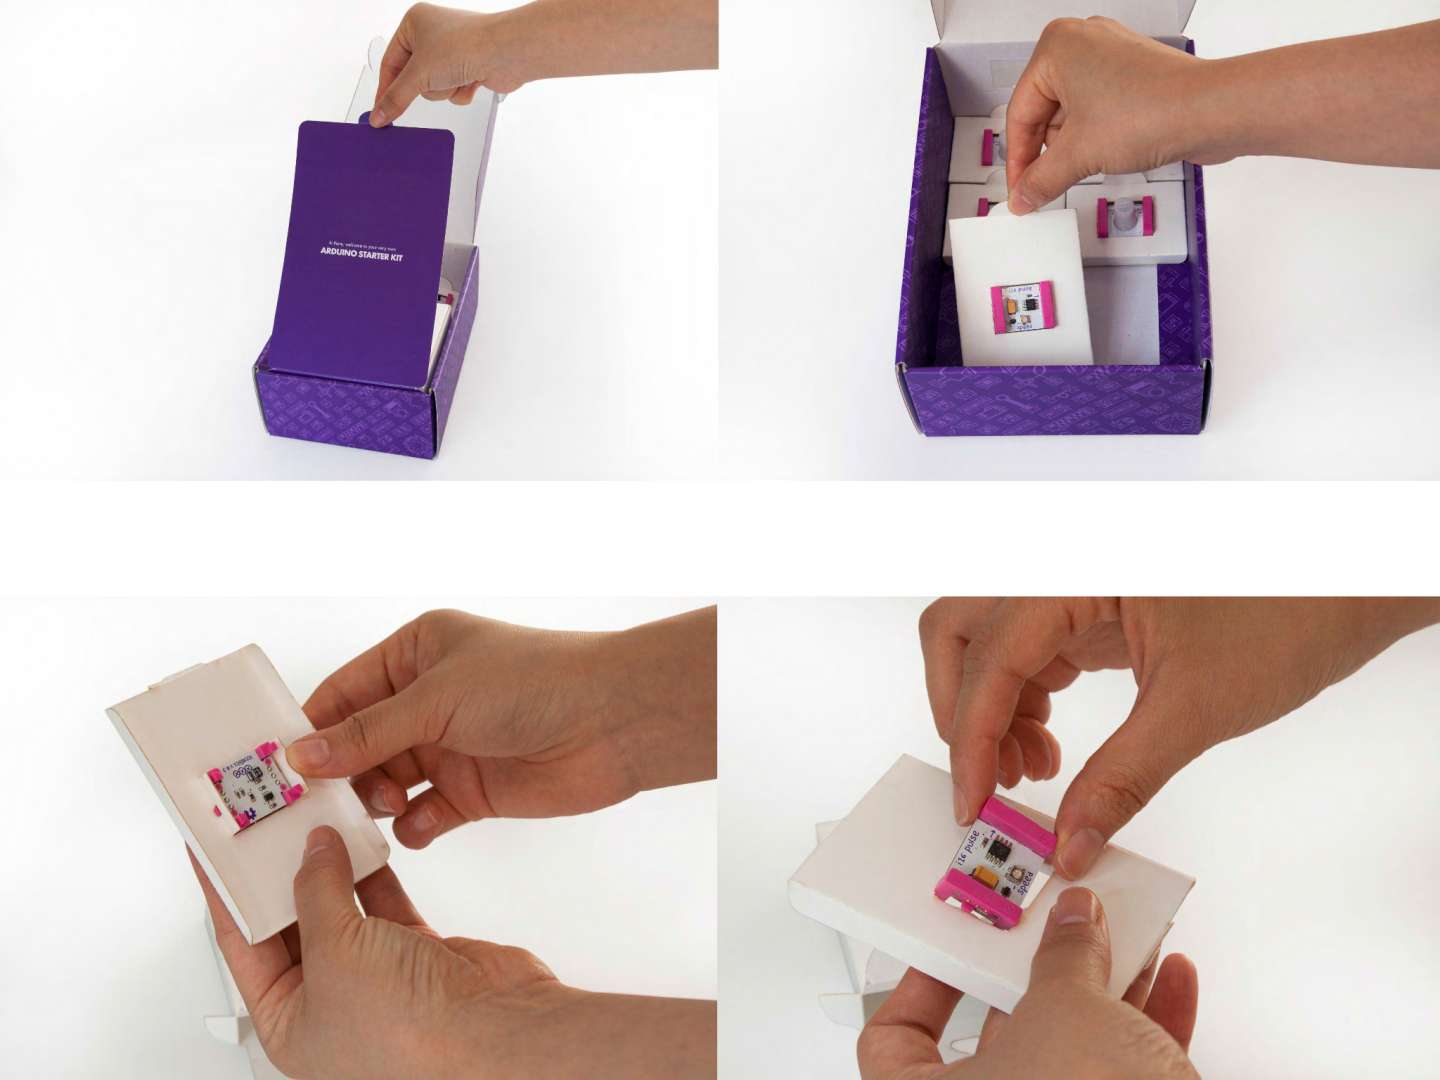 Package design for littleBits